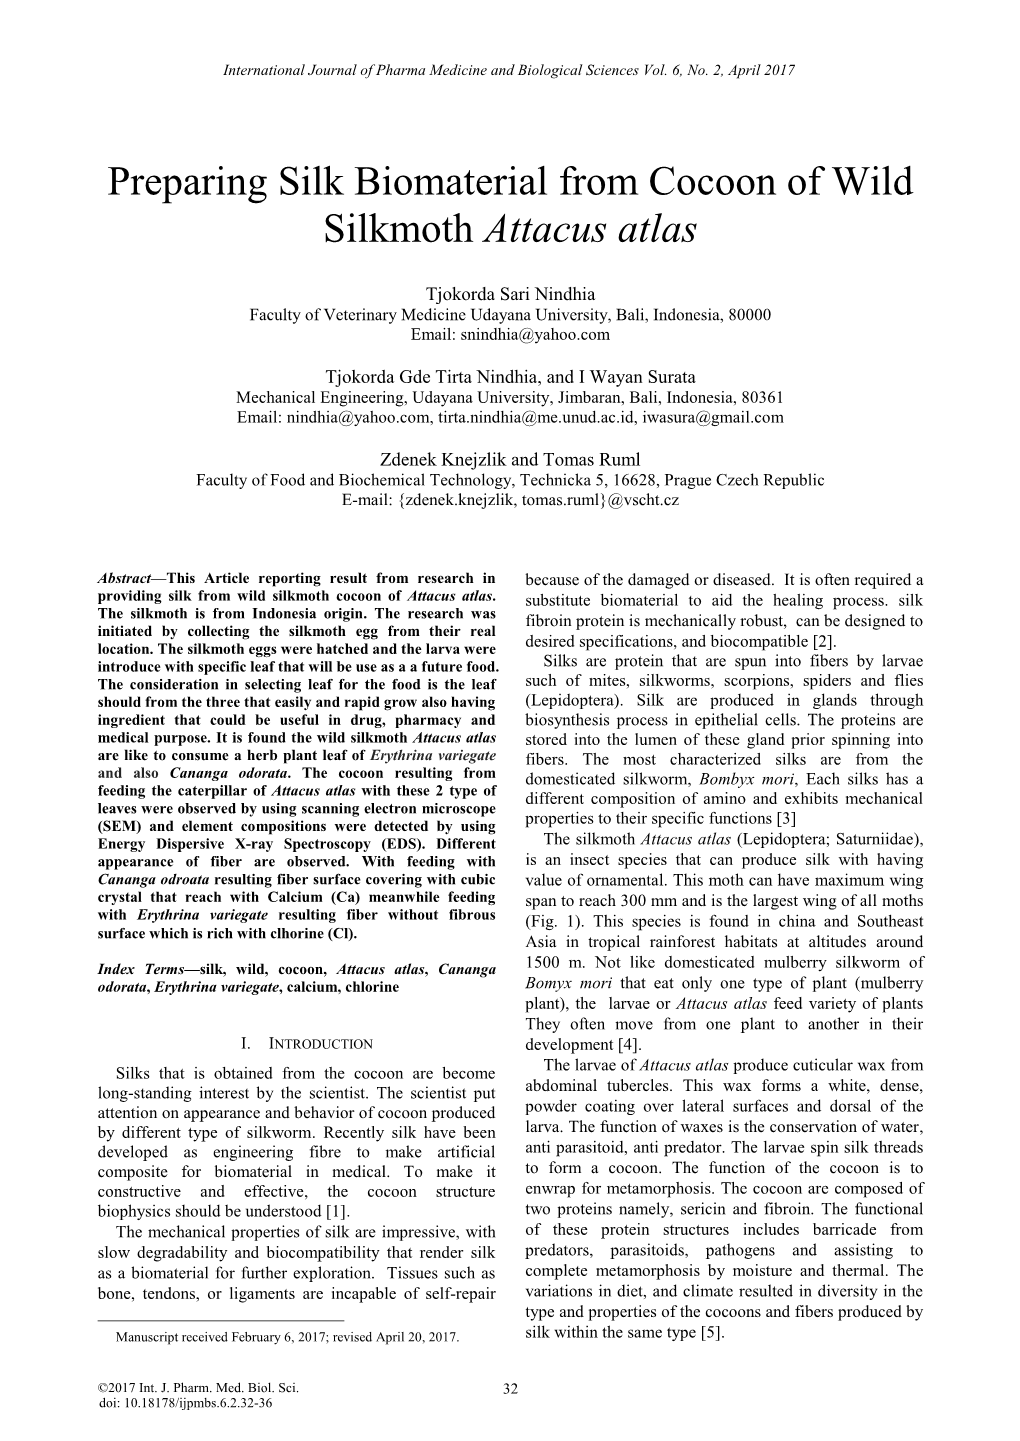 Preparing Silk Biomaterial from Cocoon of Wild Silkmoth Attacus Atlas